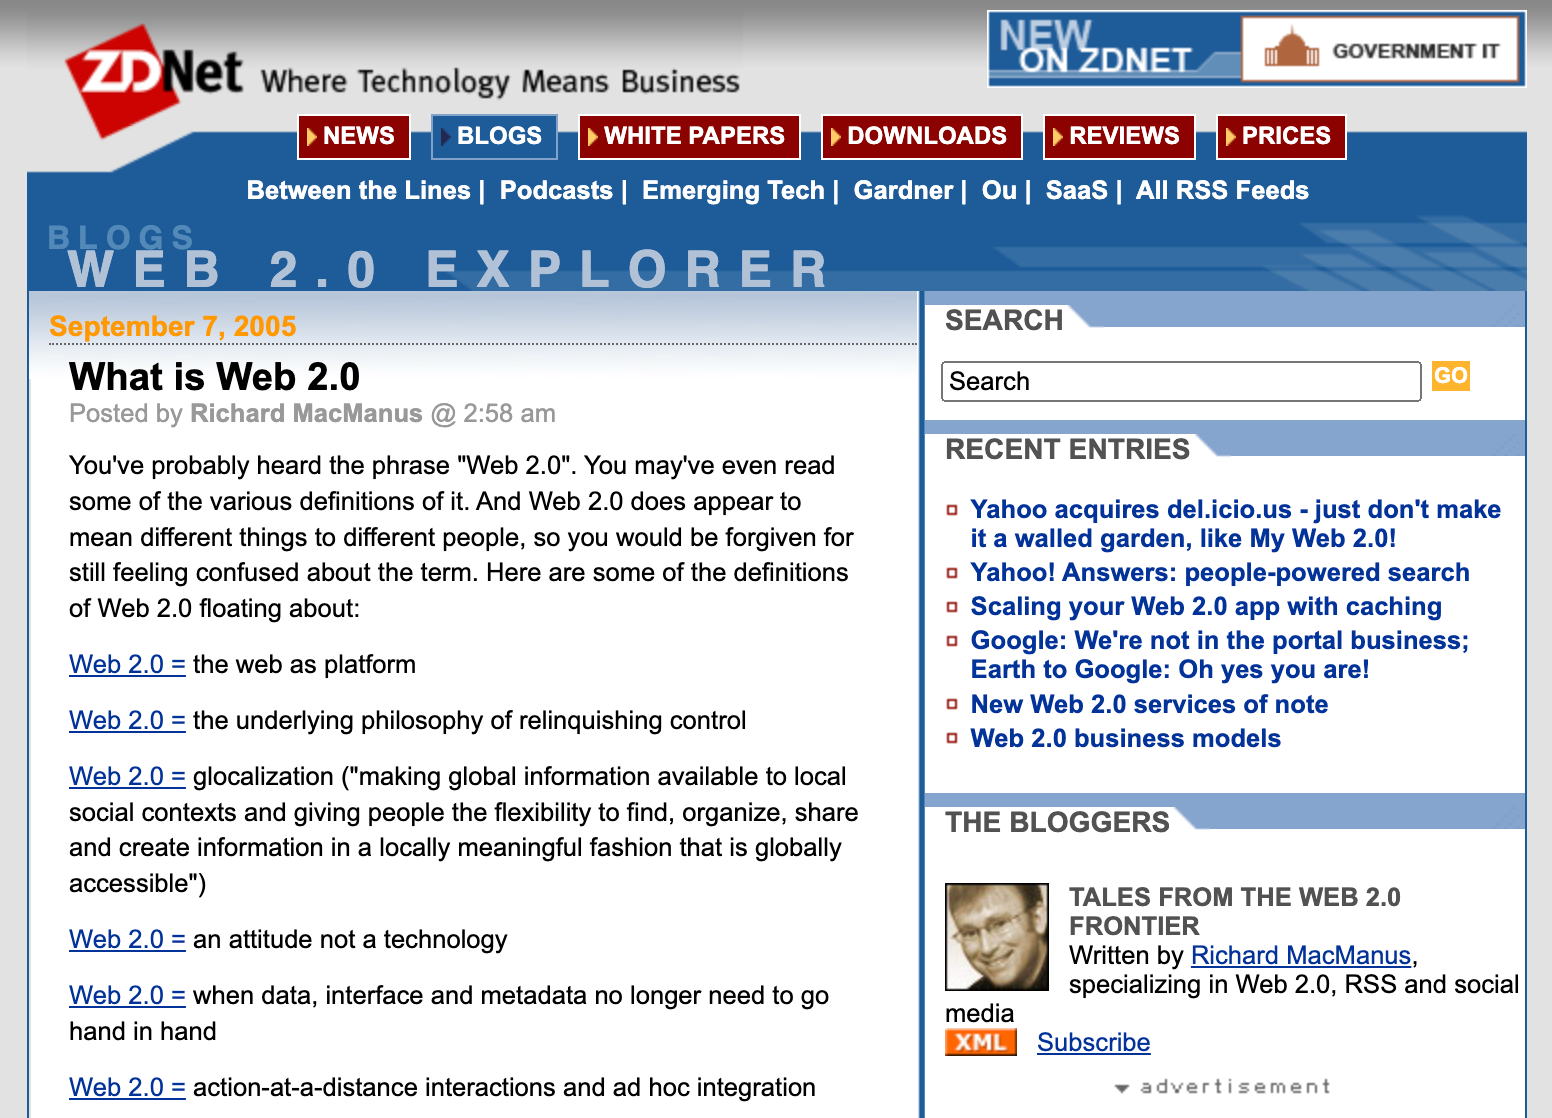 My ZDNet blog, Web 2.0 Explorer, soon after I’d started it.